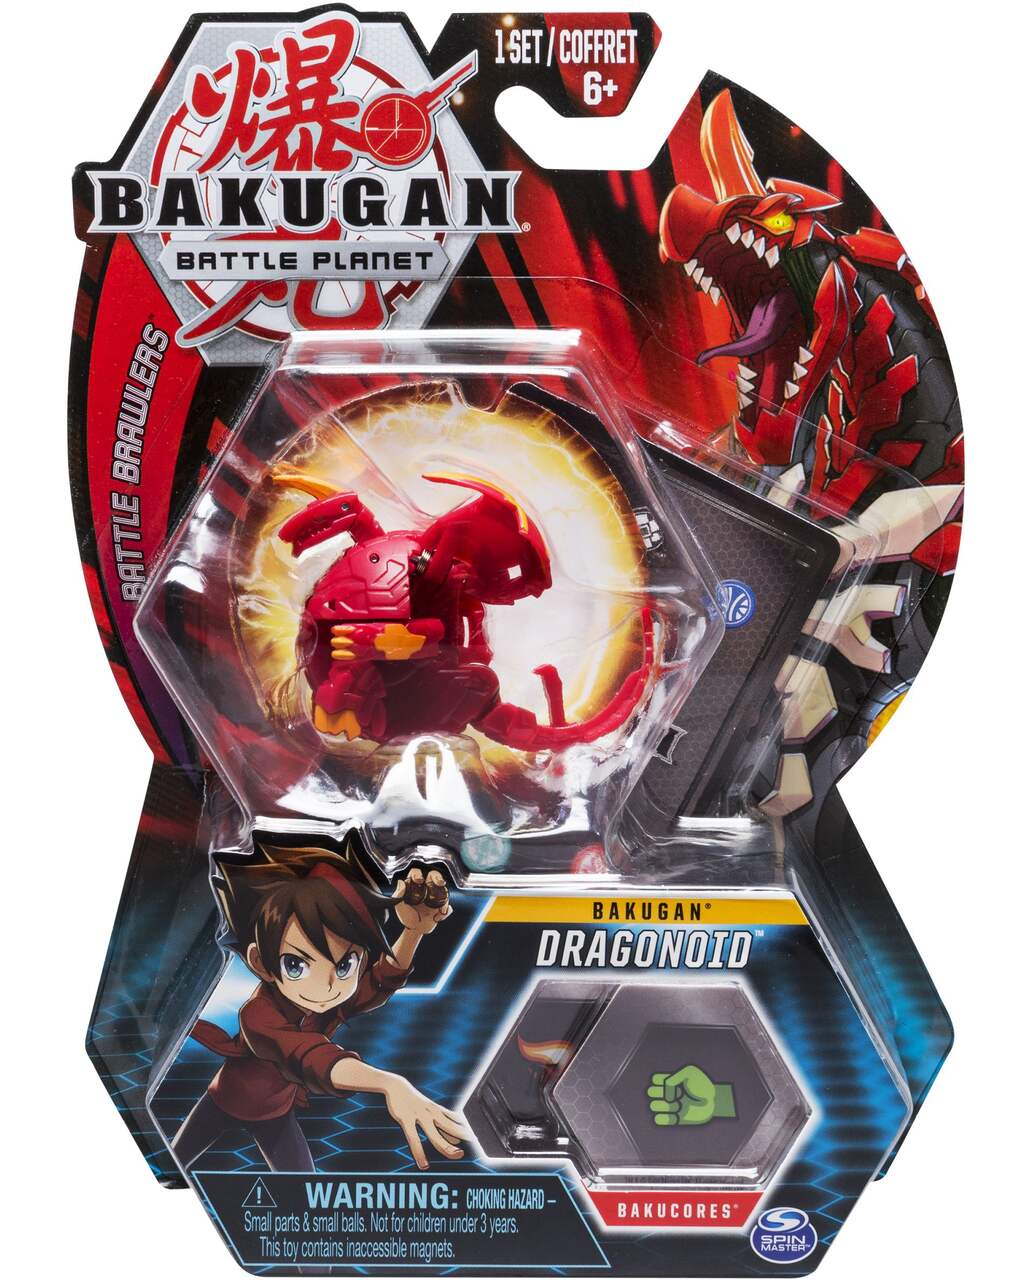 Bakugan Core Ball Transforming Creature Action Figure Toy